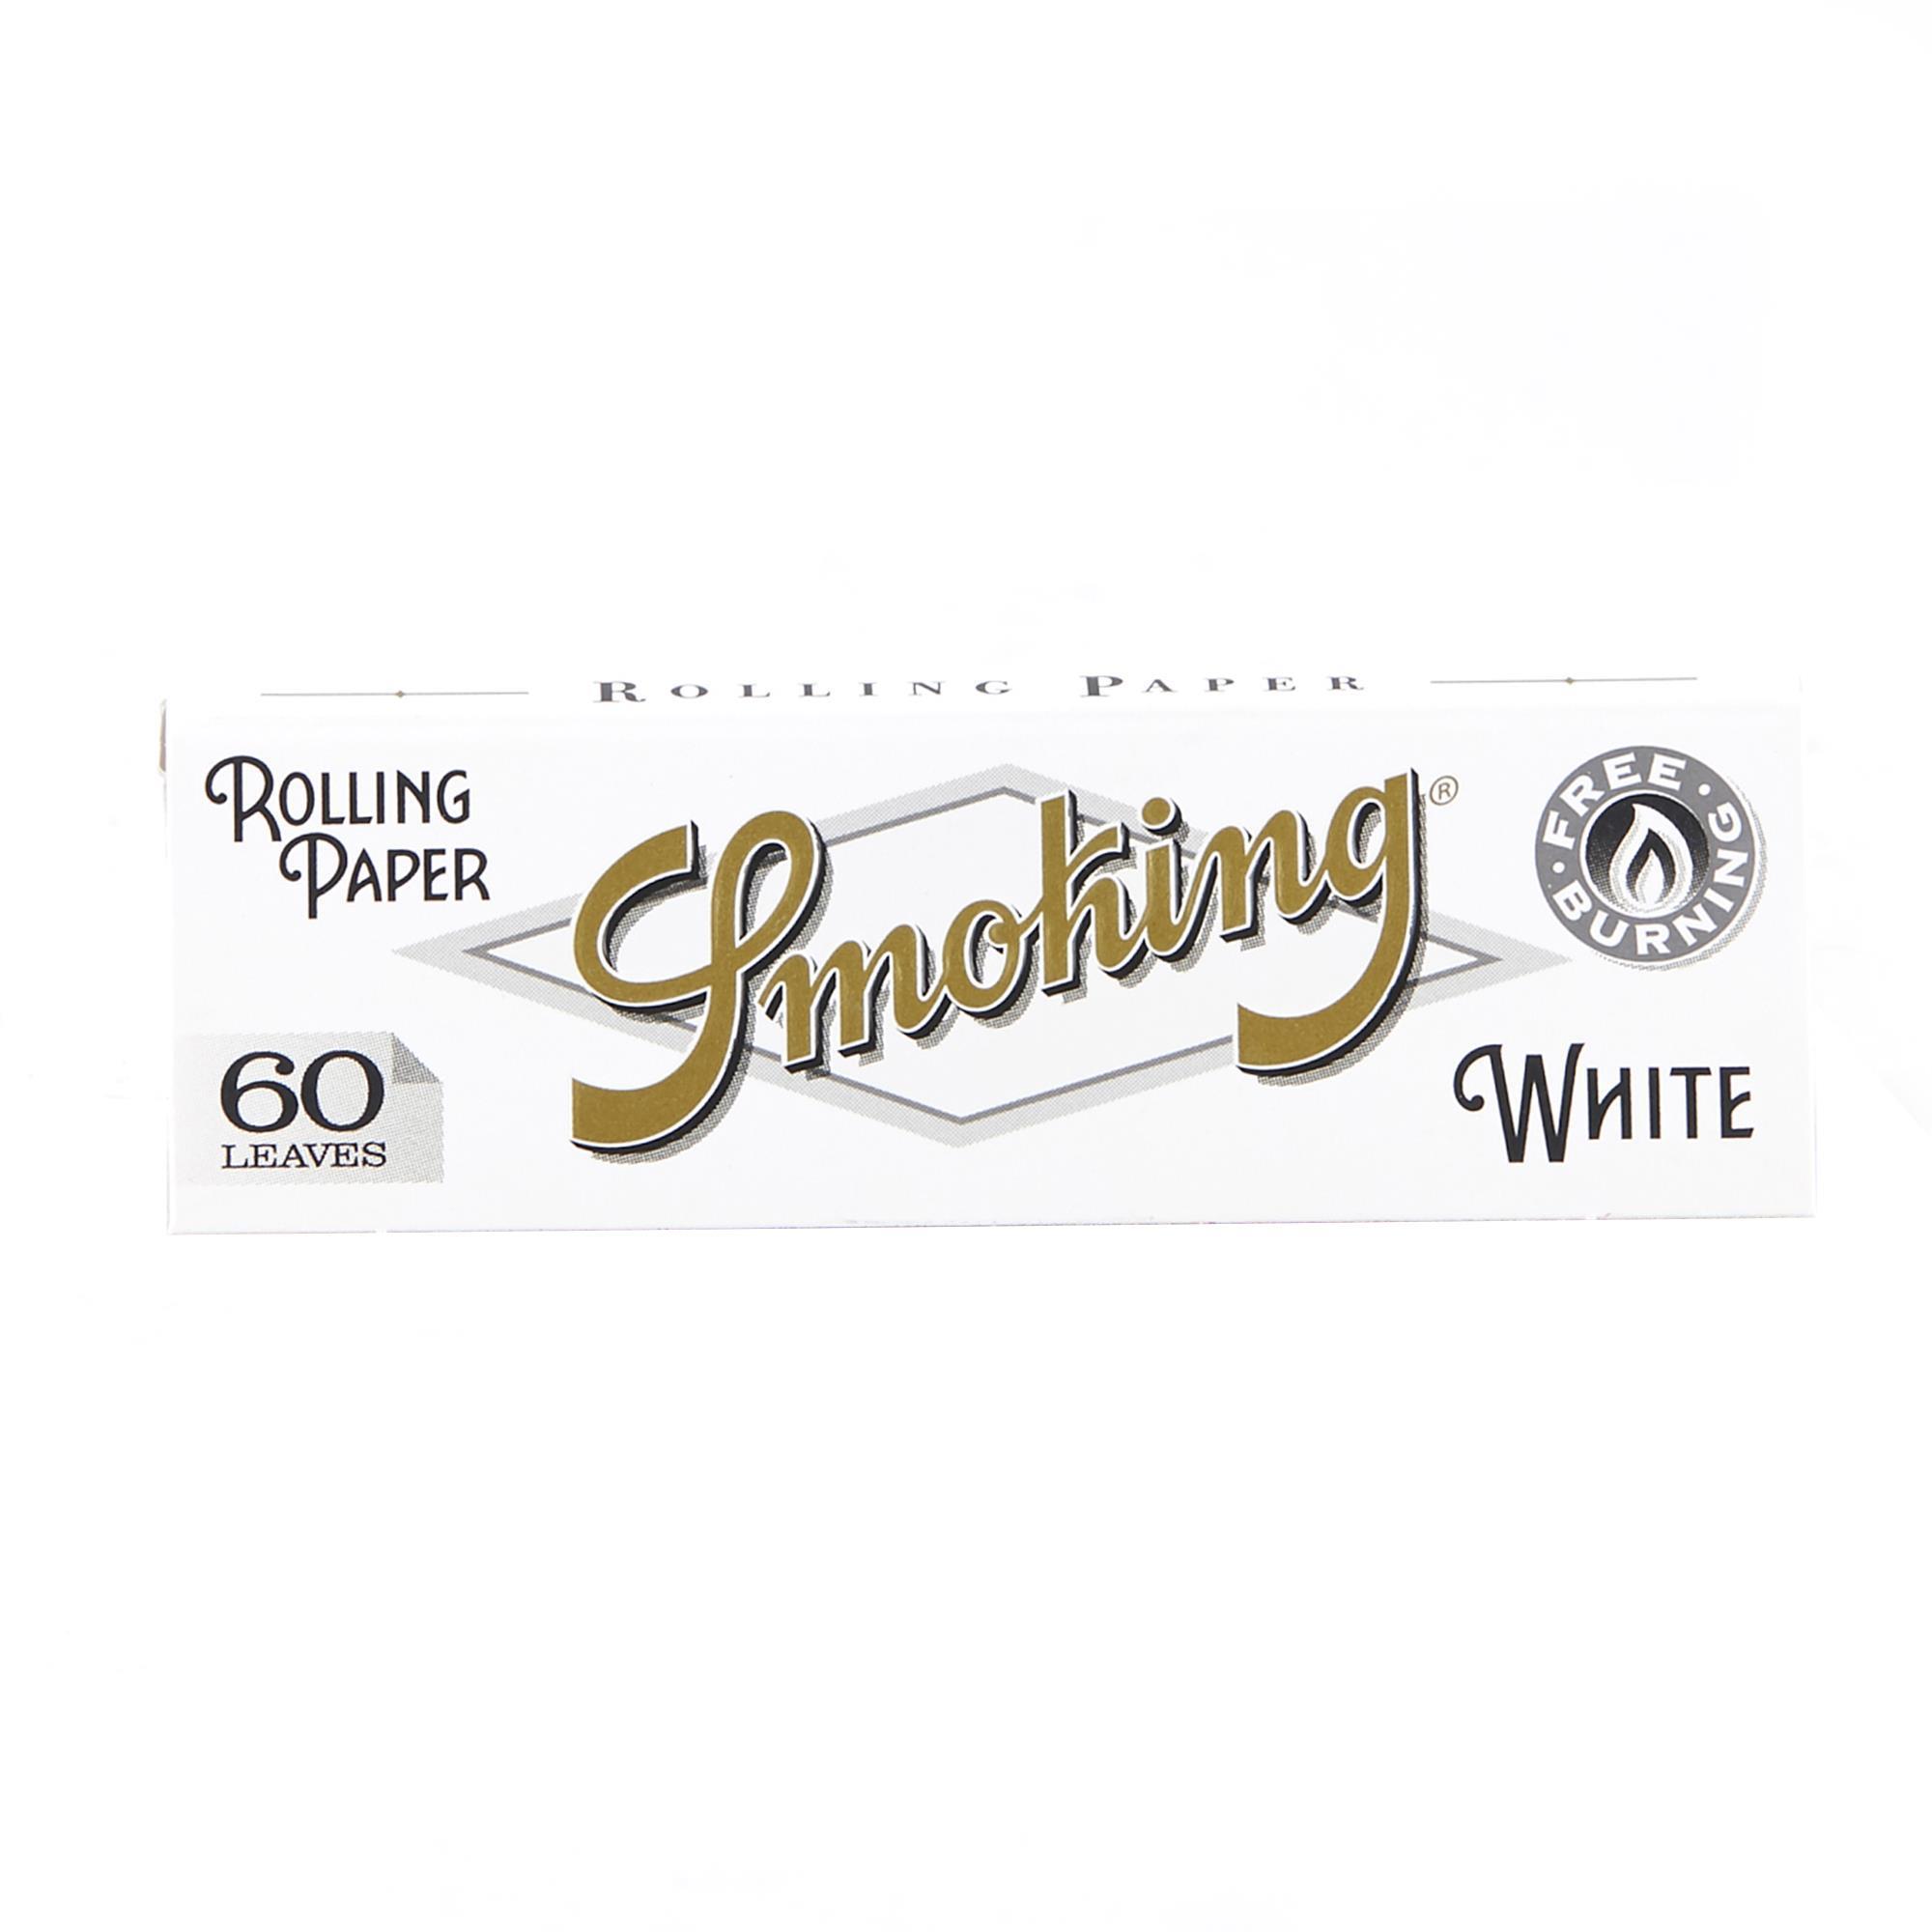 SMOKING WHITE